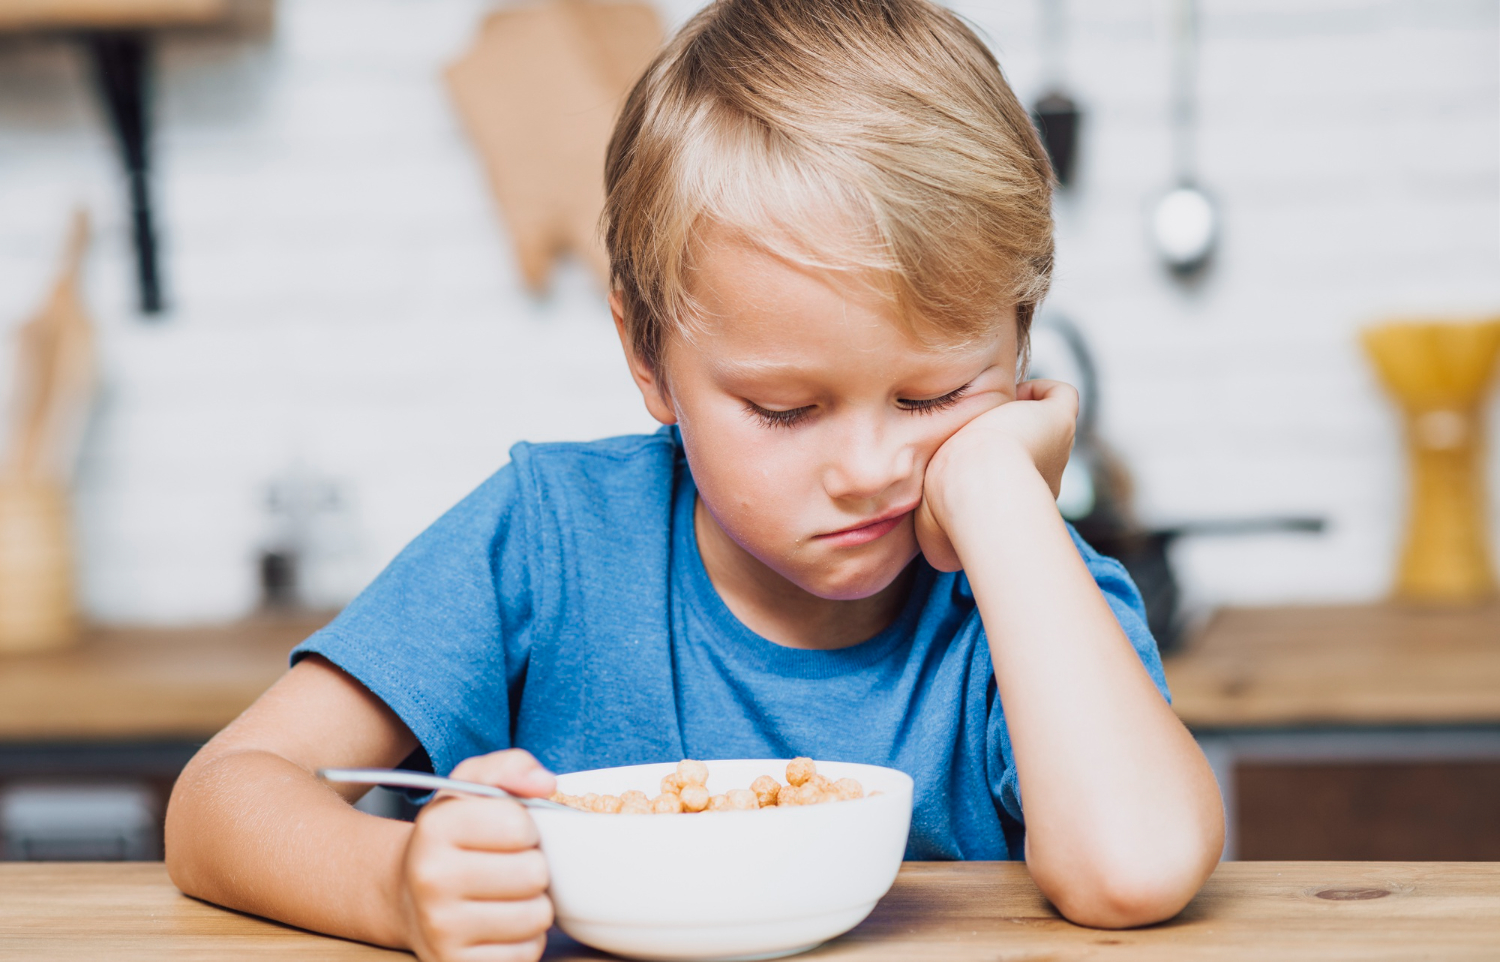 Anak GTM? Apa Aja Sih Resep Masakan Menarik Anti GTM untuk Anak 2 Tahun? Moms Wajib Cek Artikel Ini